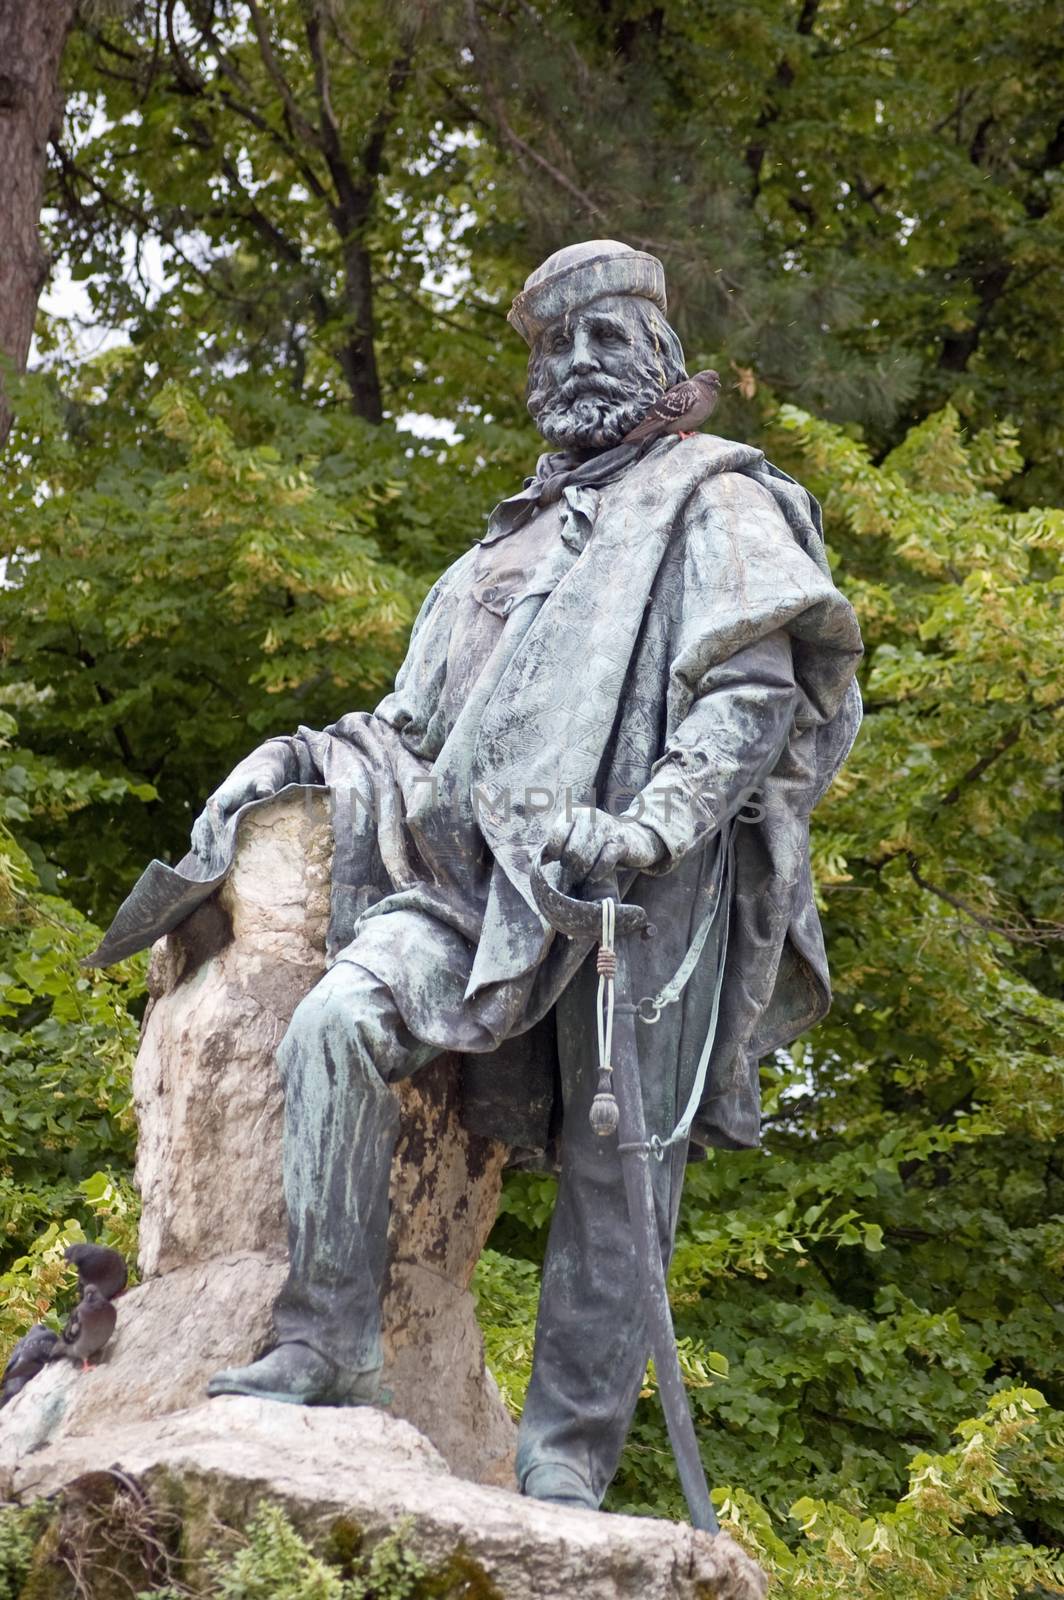 Monument to the Italian revolutionary and military hero Giuseppe Garibaldi (1807 - 1882). Giardini, Venice, Italy.